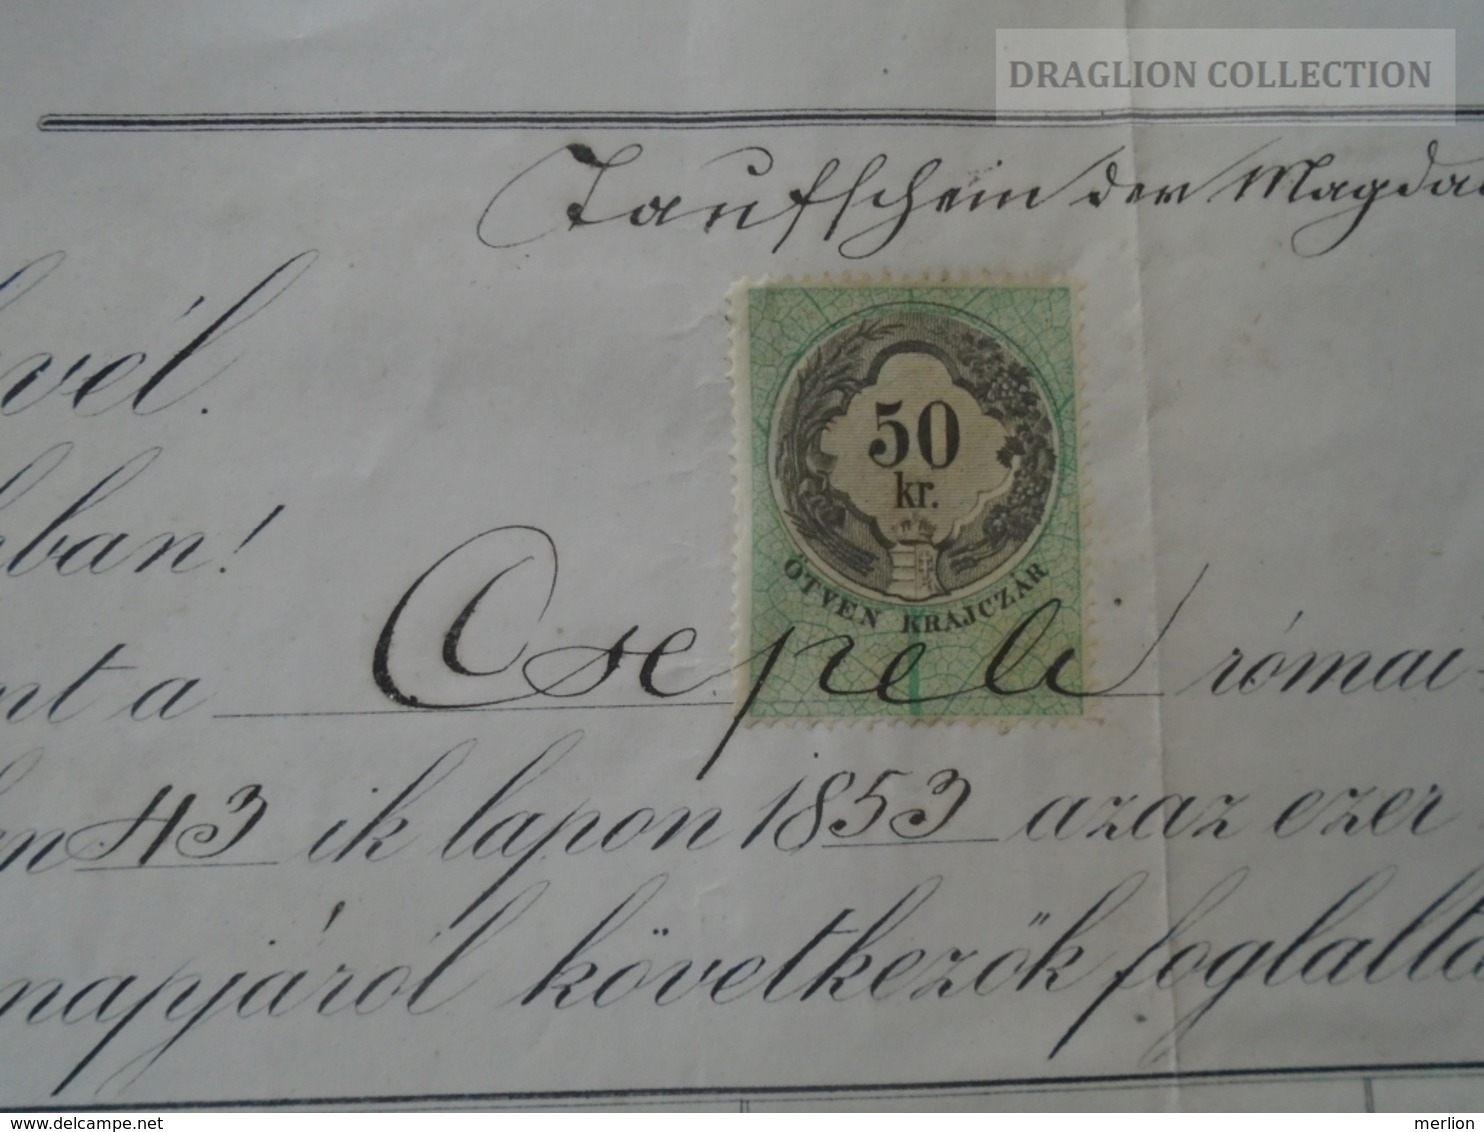 ZA176.18  Old Document  Hungary  -CSEPEL - Magdolna (1853) -János Tikmann - Maria Wilhelm - 1871 -József Mertl - Geburt & Taufe